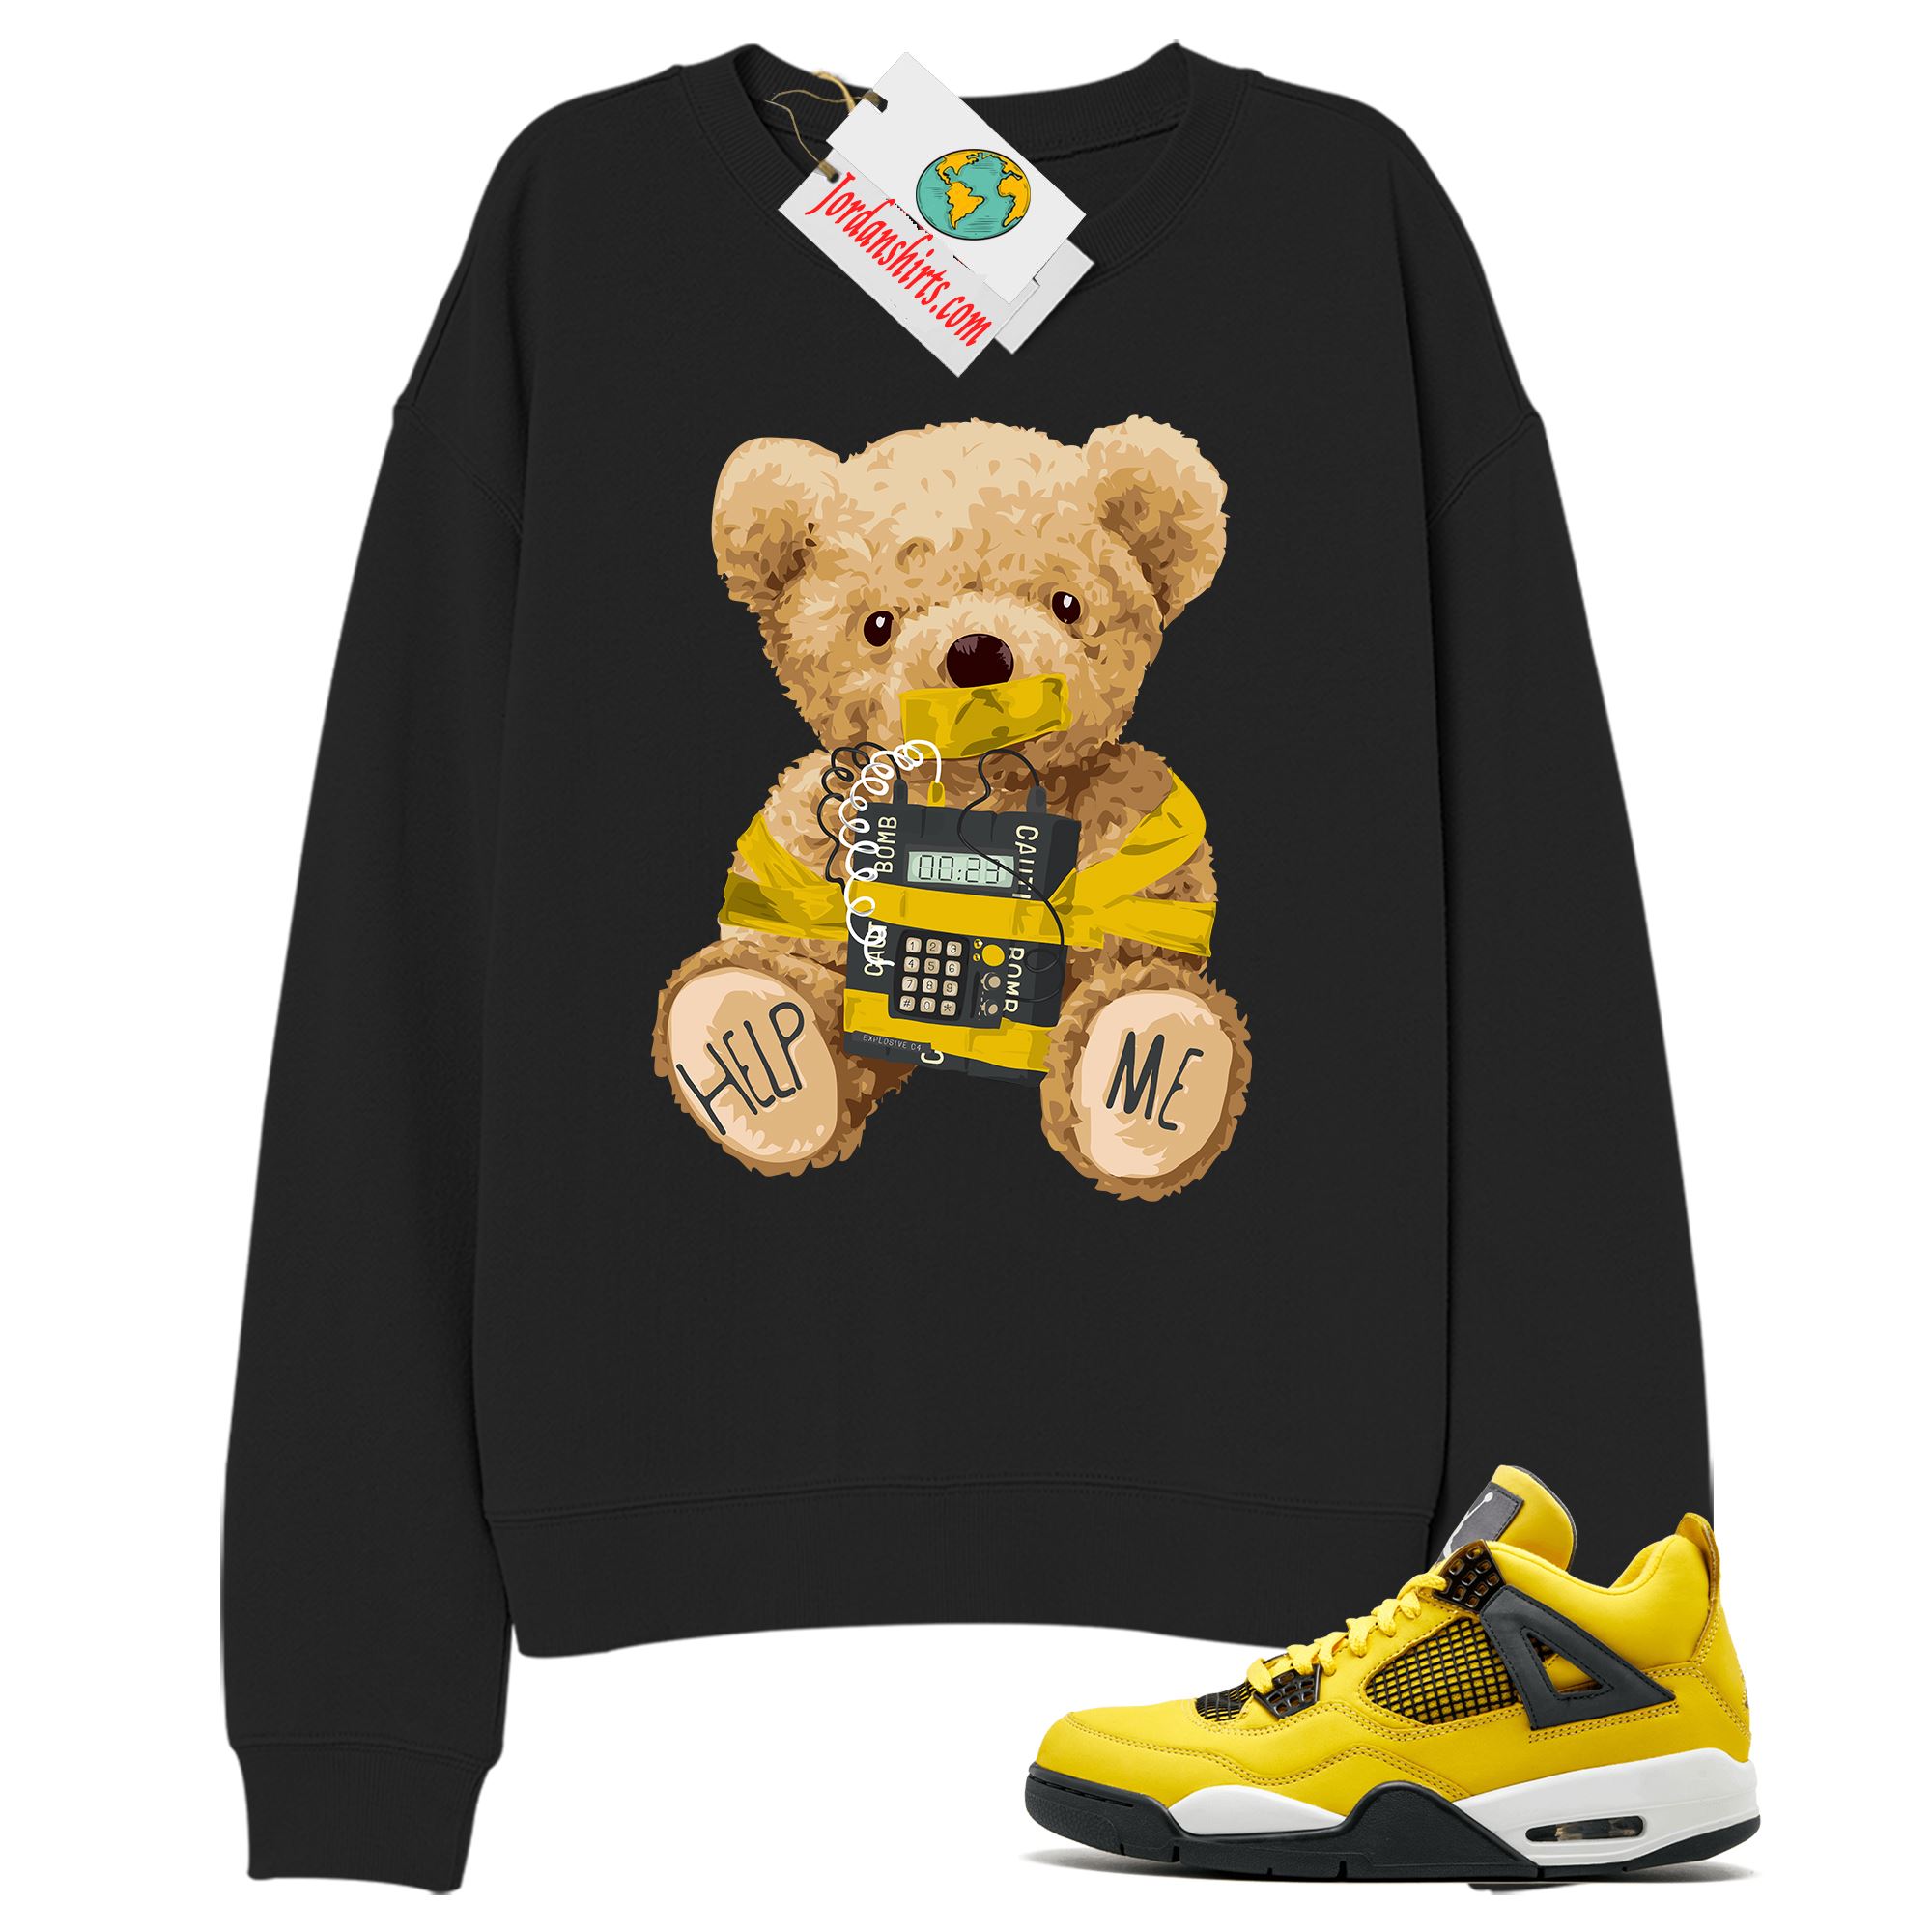 Jordan 4 Sweatshirt, Teddy Bear Bomb Black Sweatshirt Air Jordan 4 Tour Yellow Lightning 4s Full Size Up To 5xl